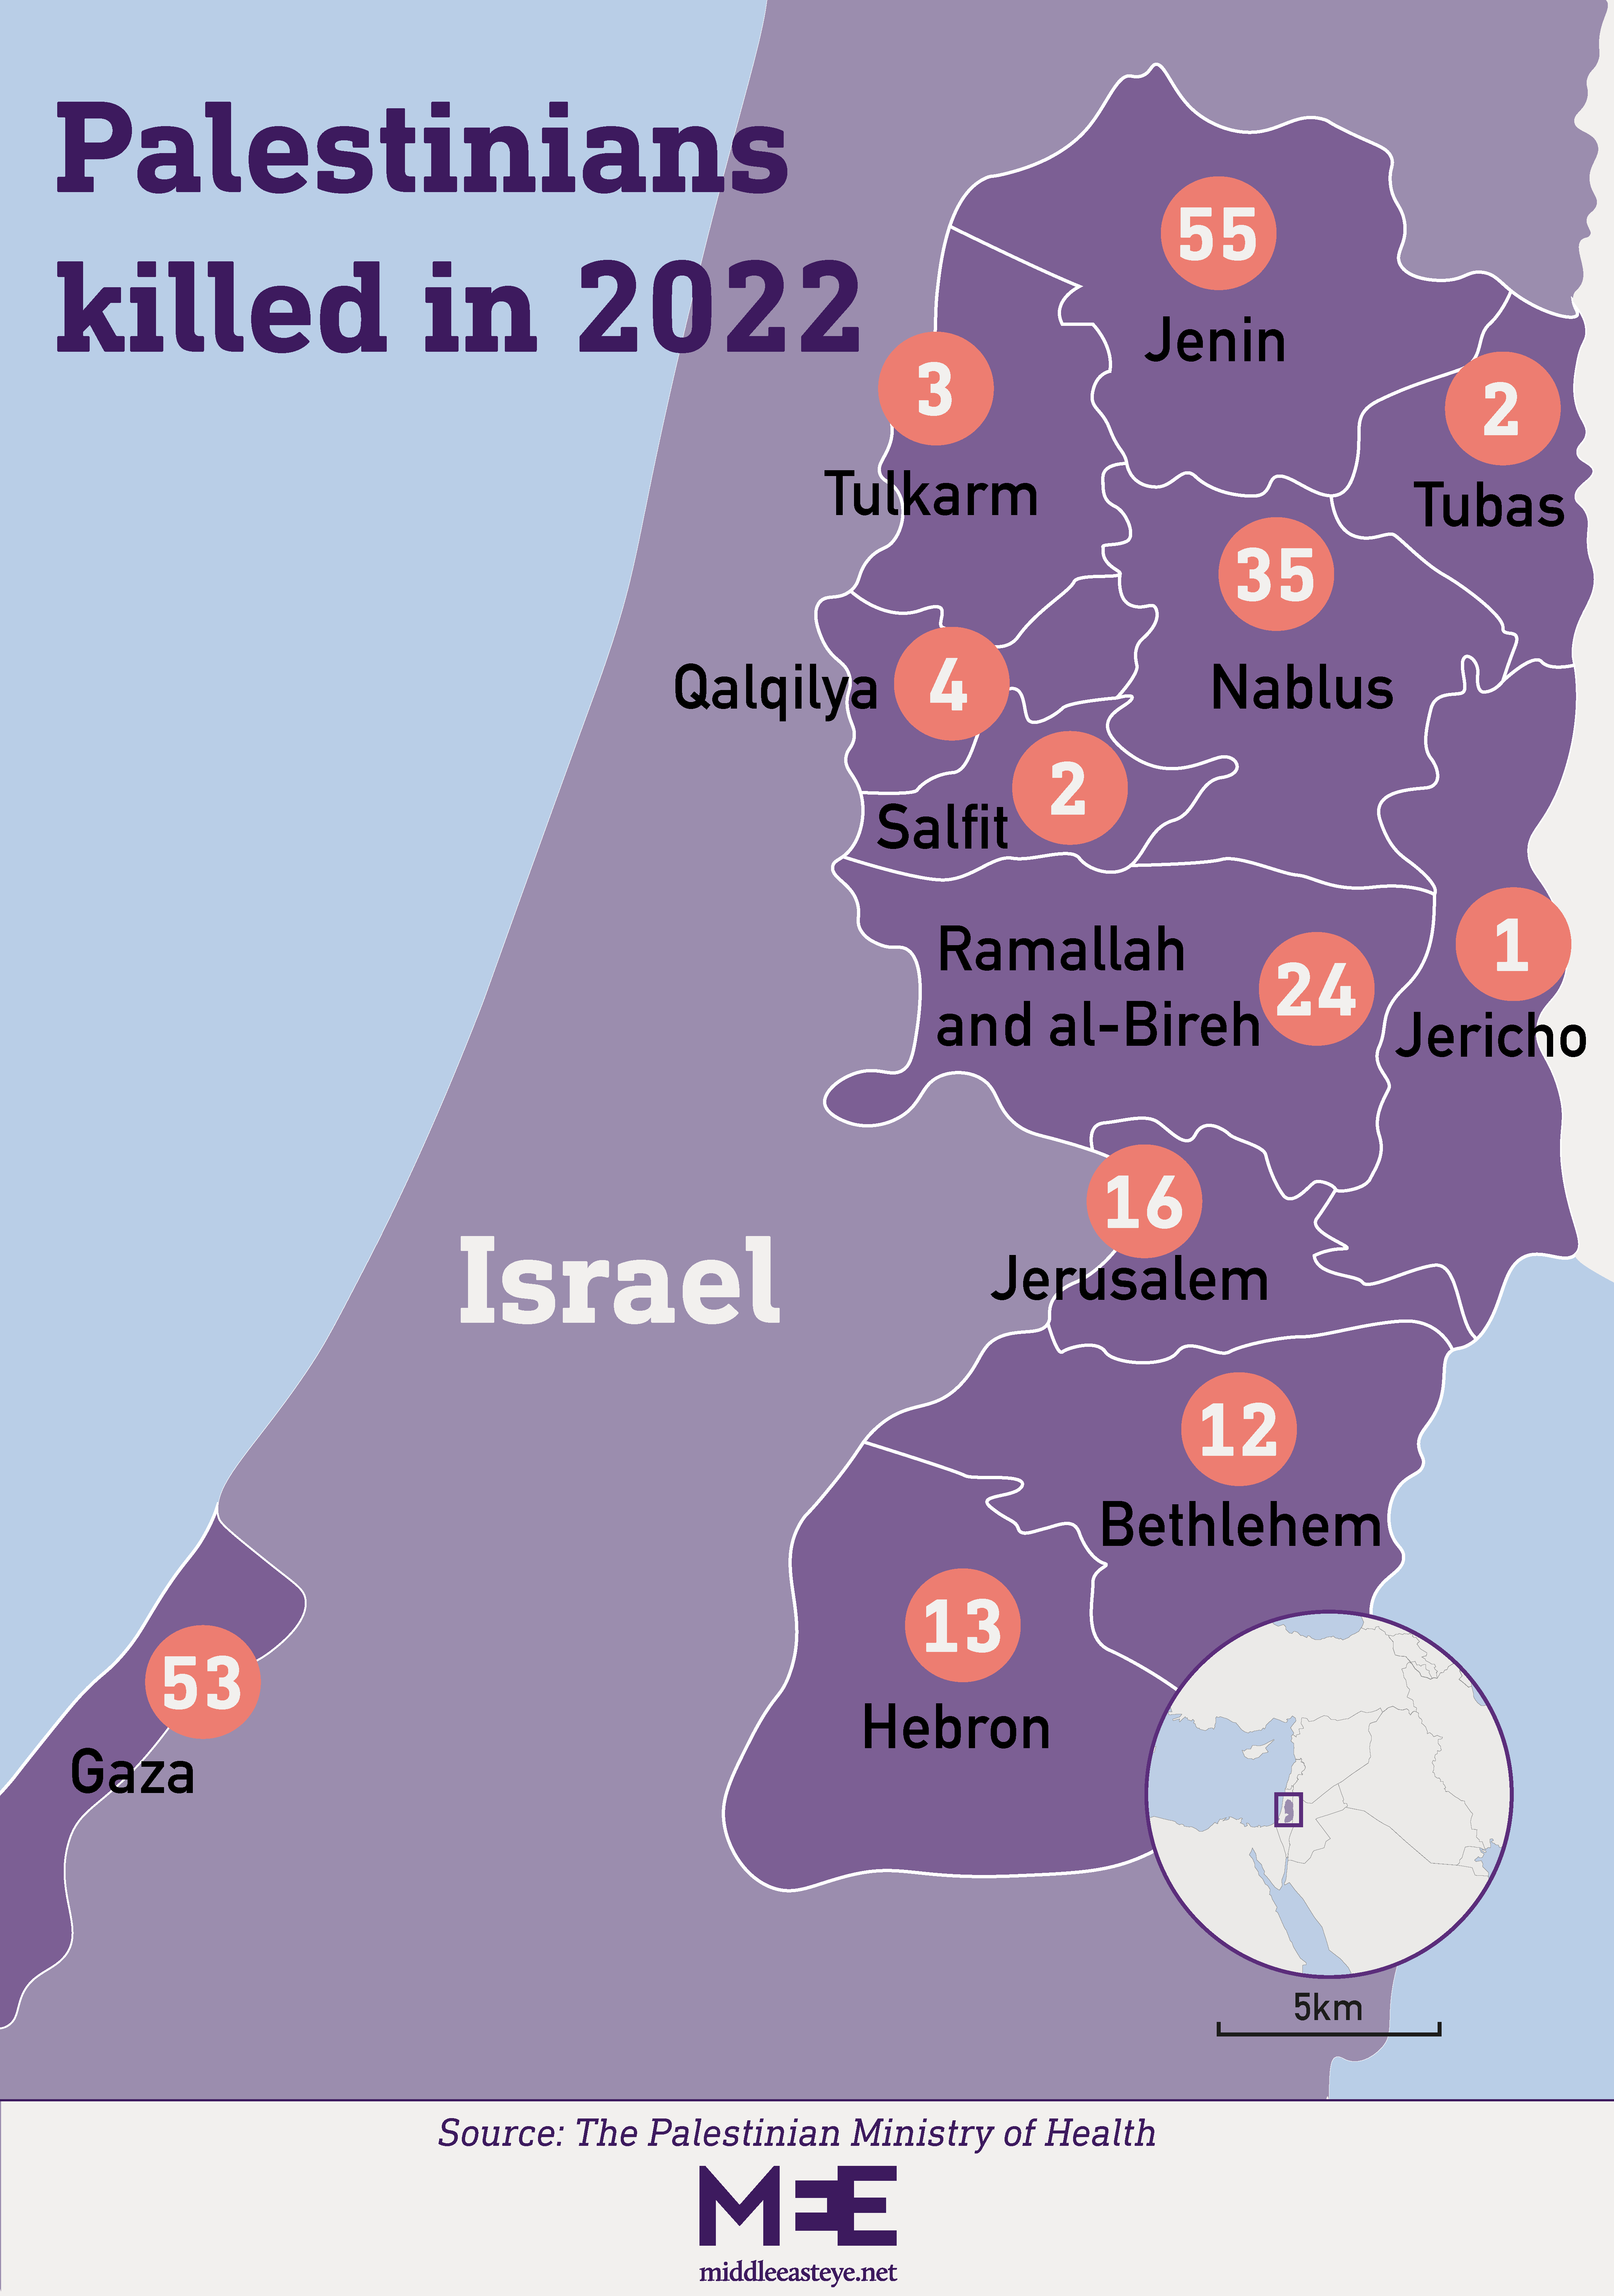 palestinians killed in 2022 by region